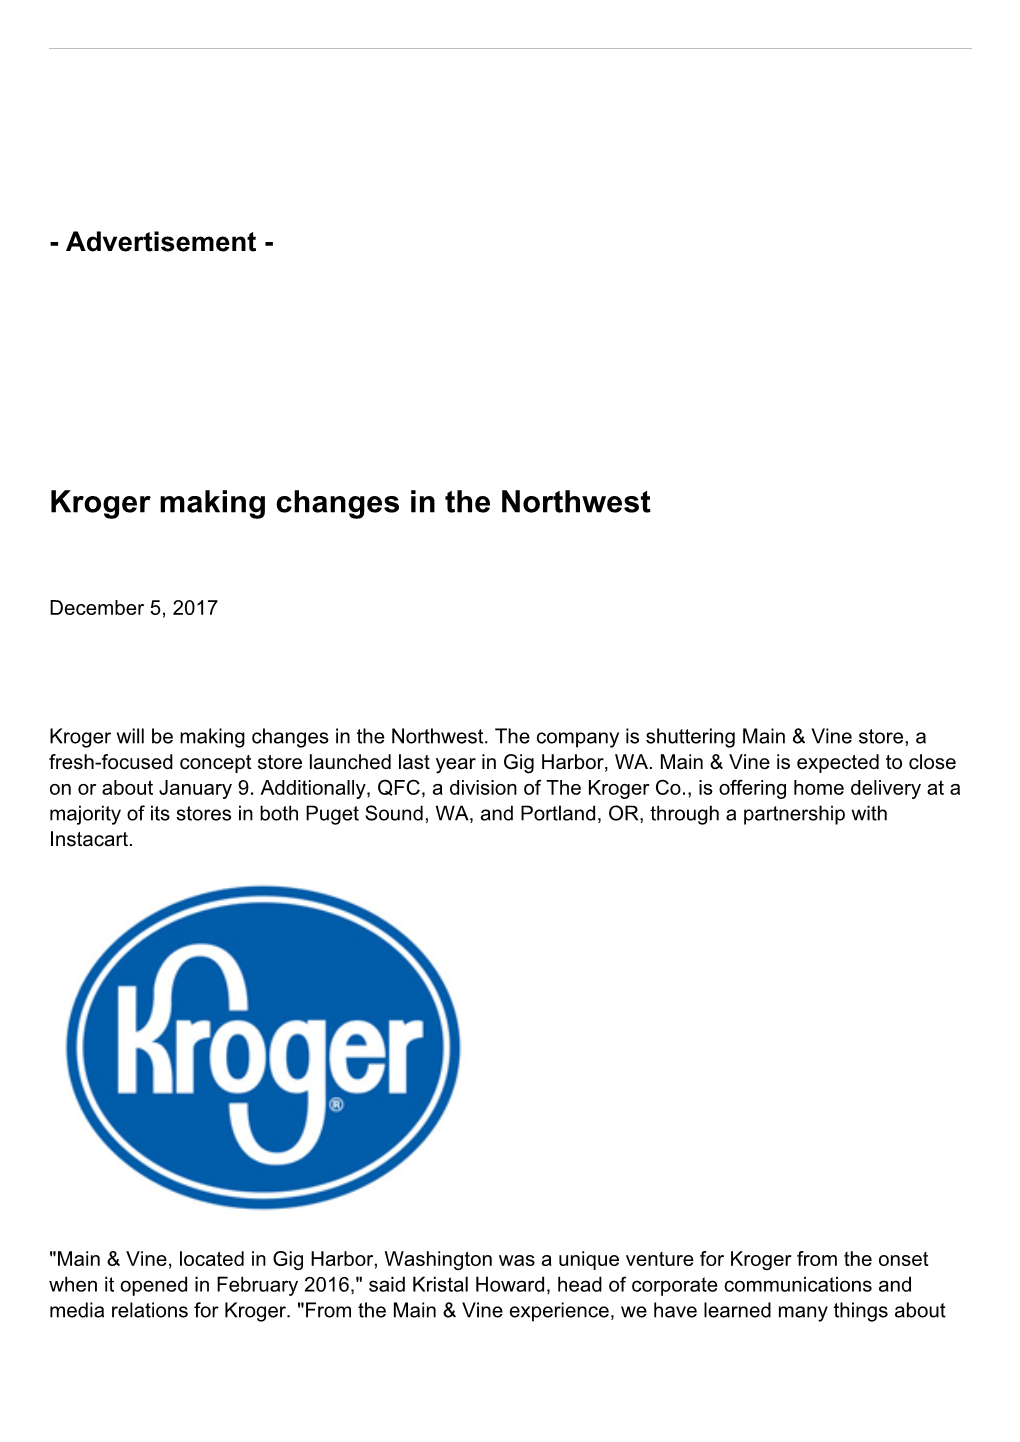 Kroger Making Changes in the Northwest